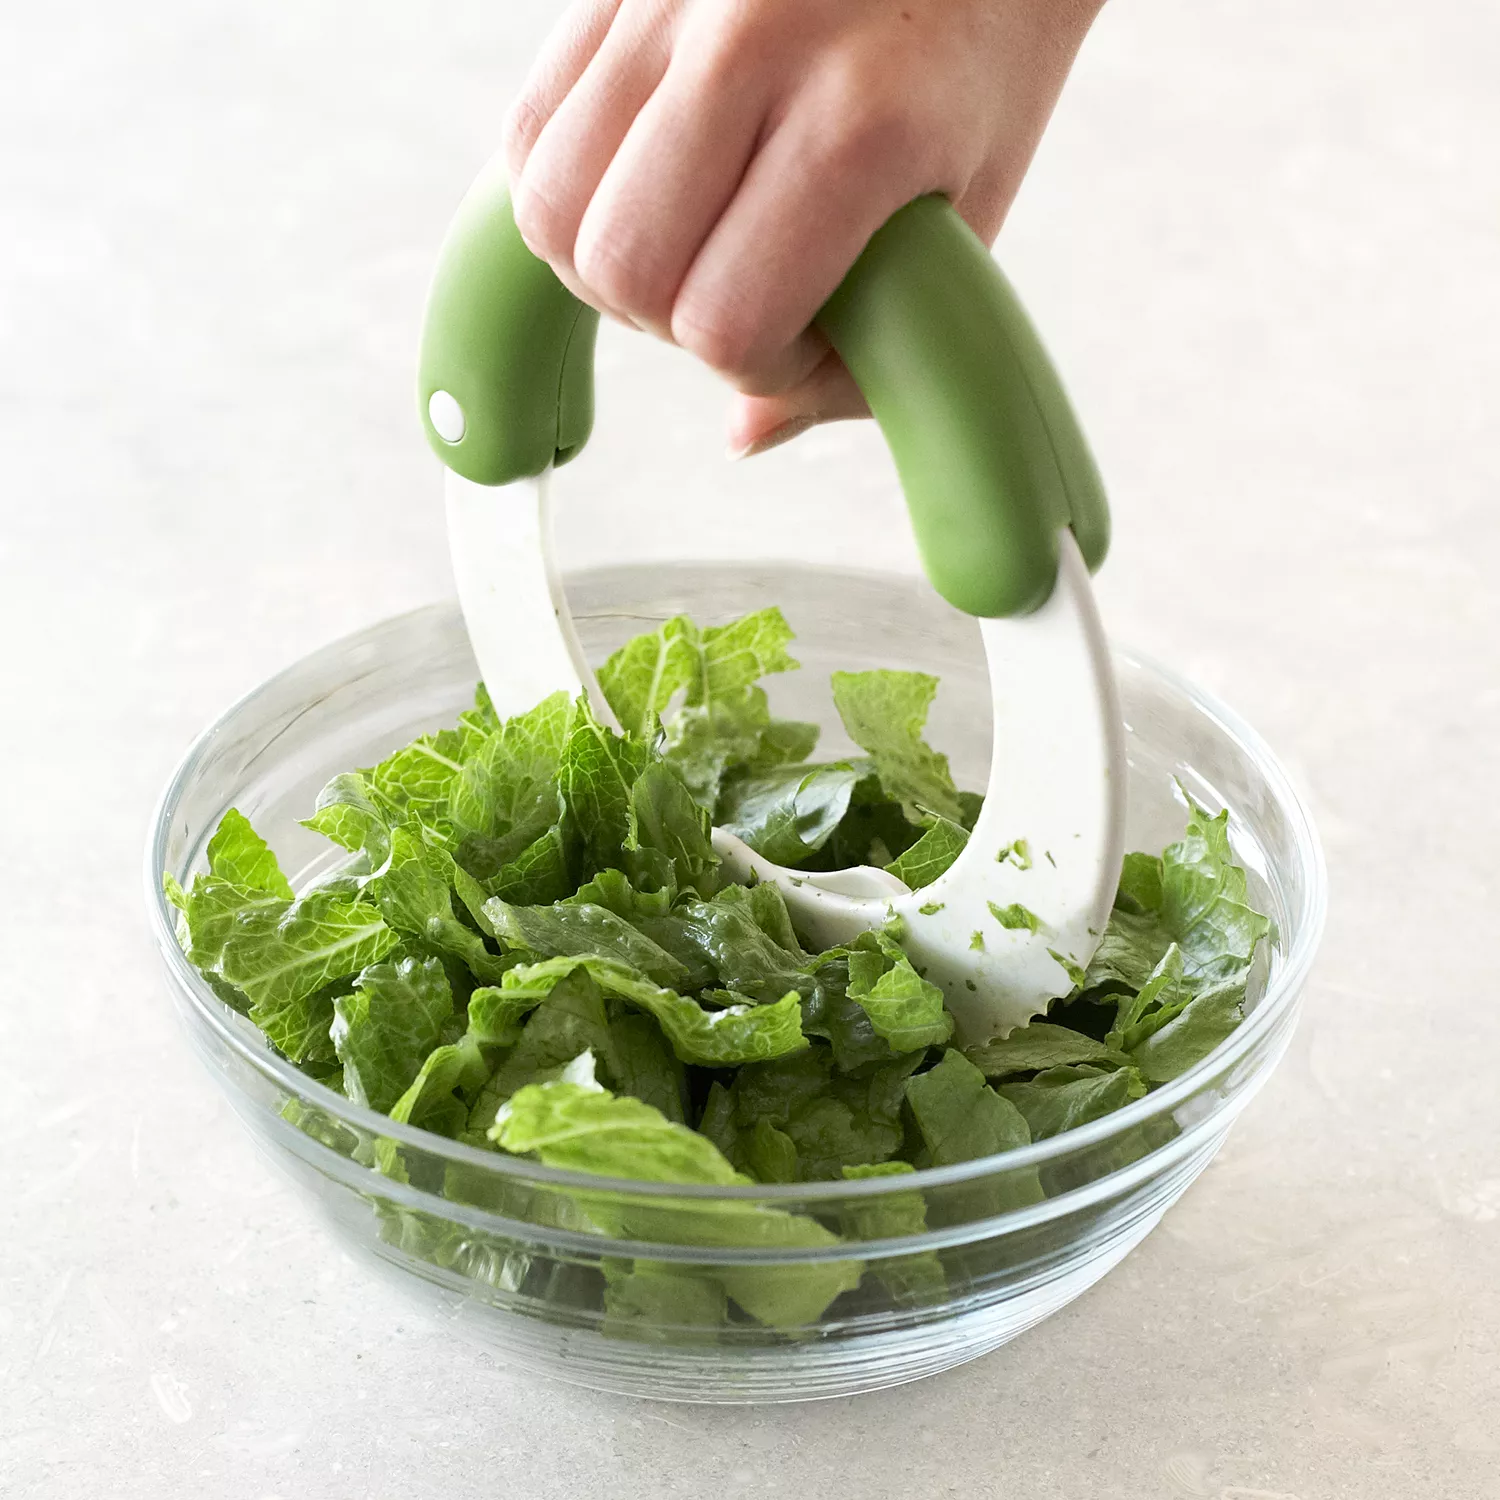 Chef'n 104-259-120 SaladShears Nylon Lettuce Chopper - White